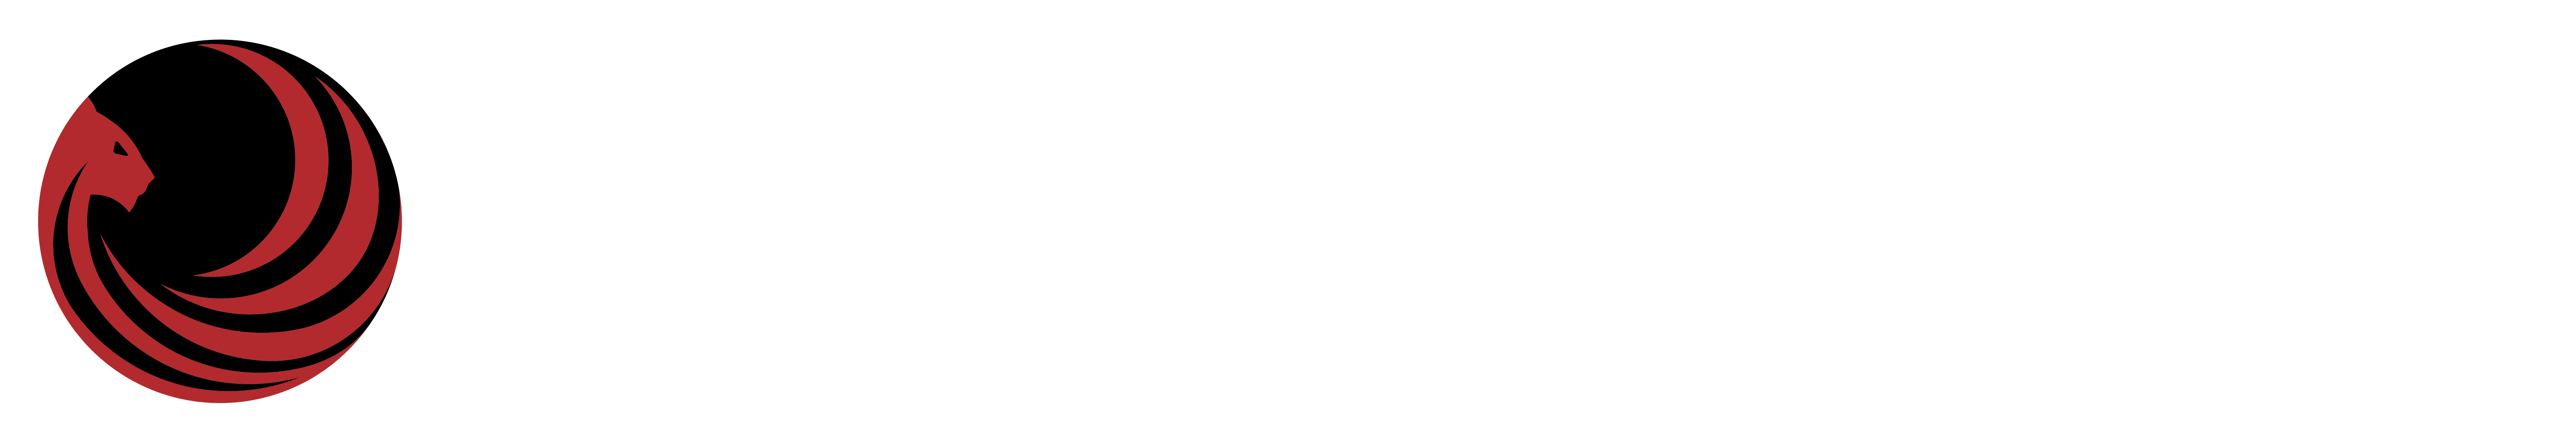 Tigereye-logo